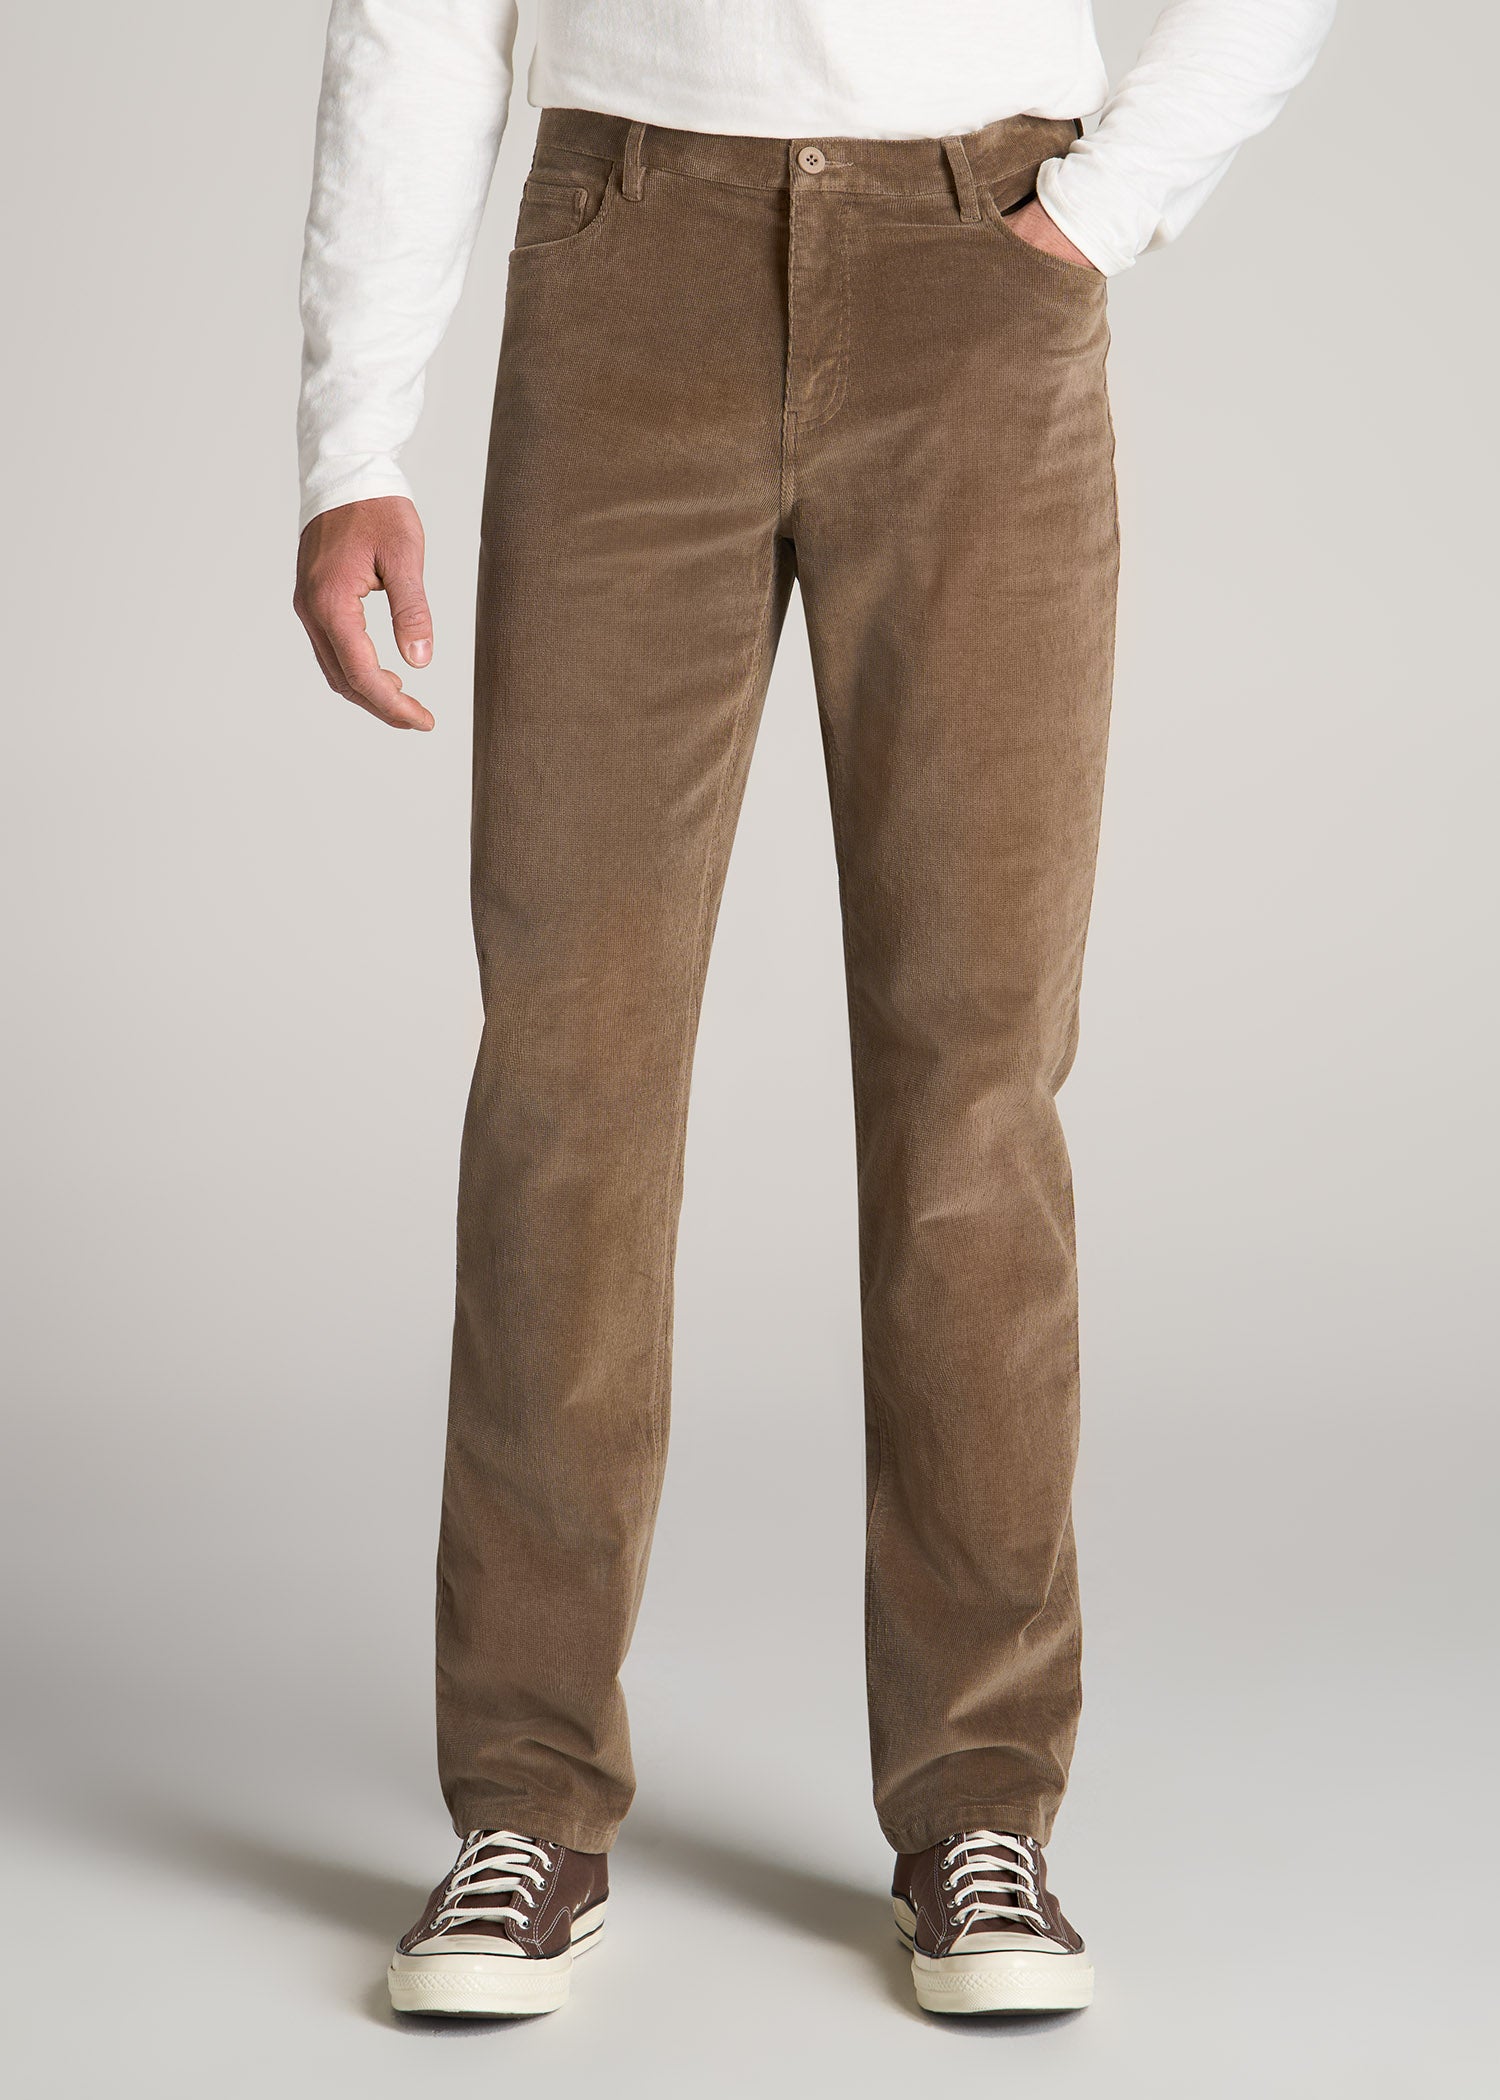 Stretch Corduroy 5 Pocket Pants for Tall Men